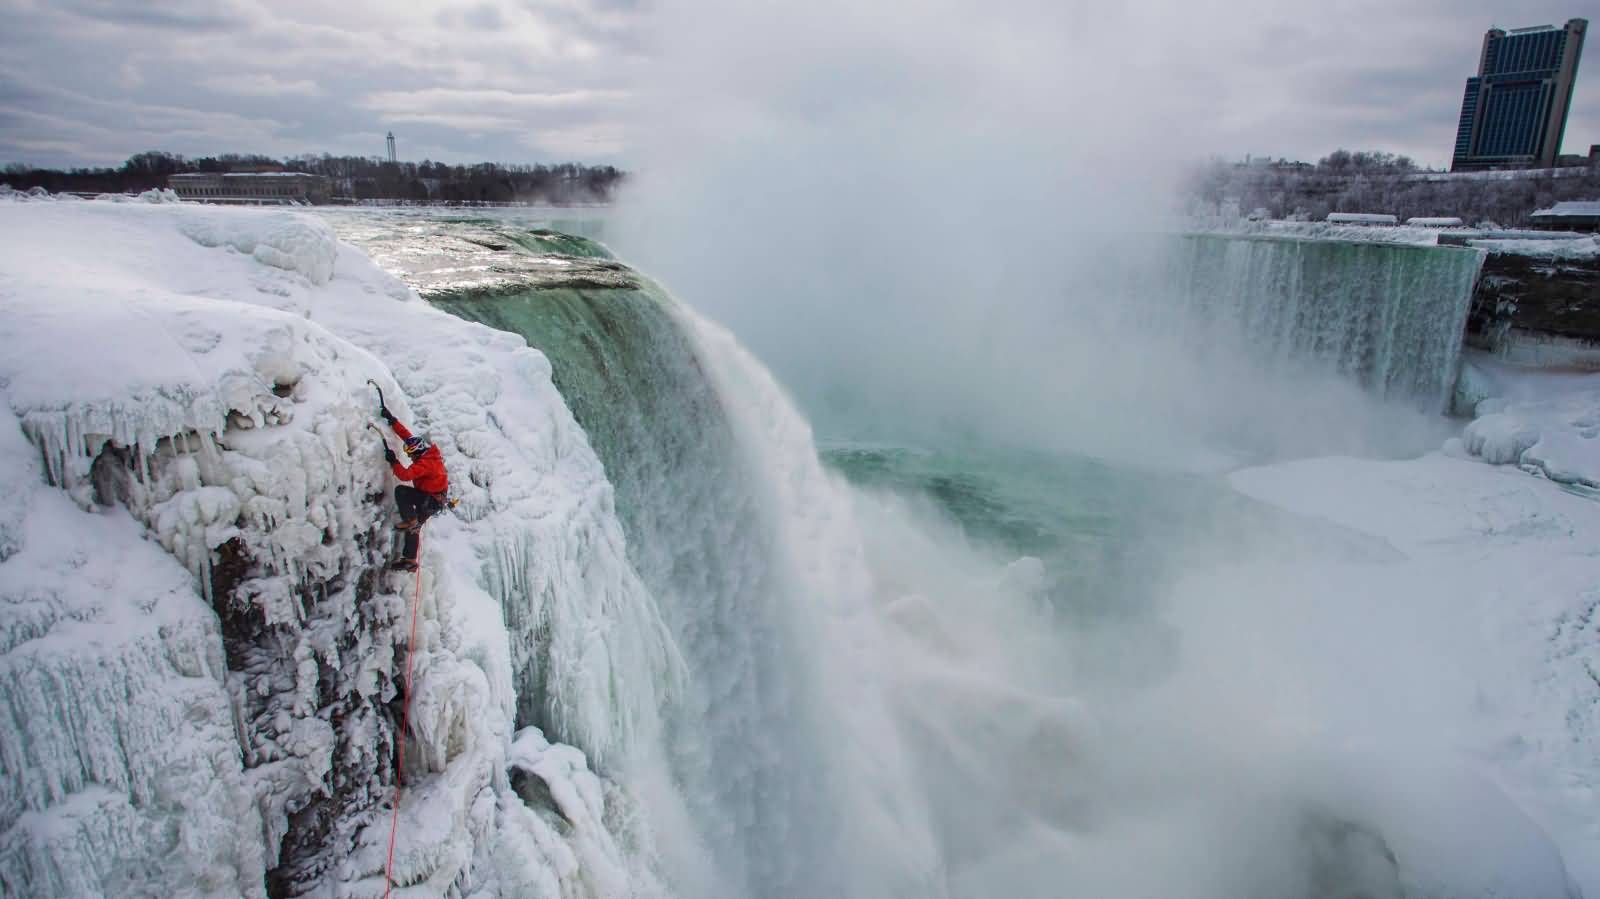 Will Gadd's Historic Climb Up Frozen Niagara Falls